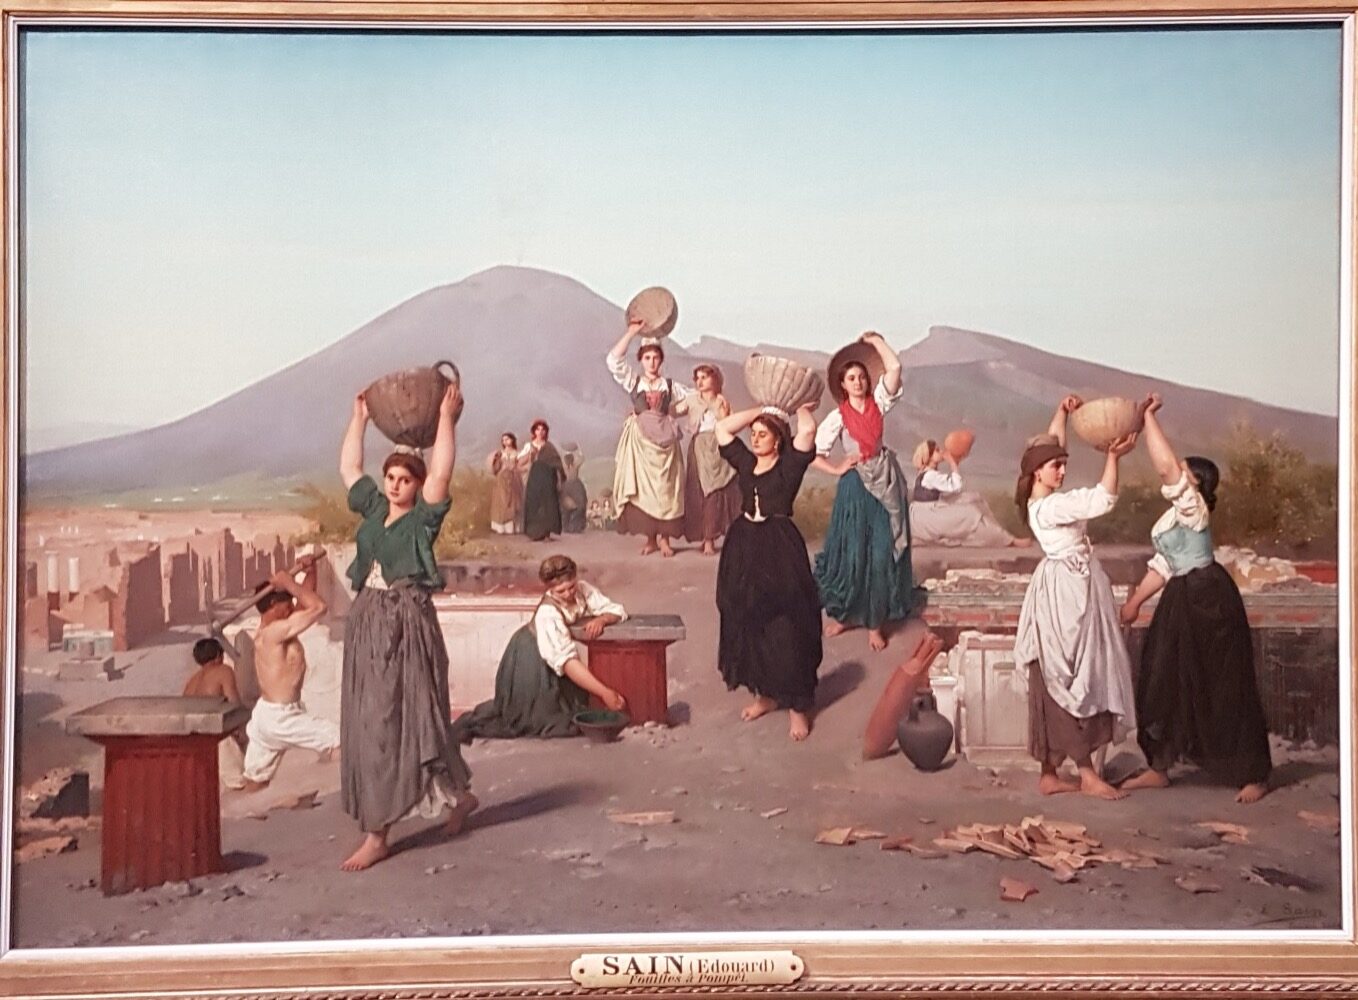 Edouard Sain, 1865, Fouilles à Pompei, Musée d'Orsay Paris, malerei, Genremalerei, Pompei